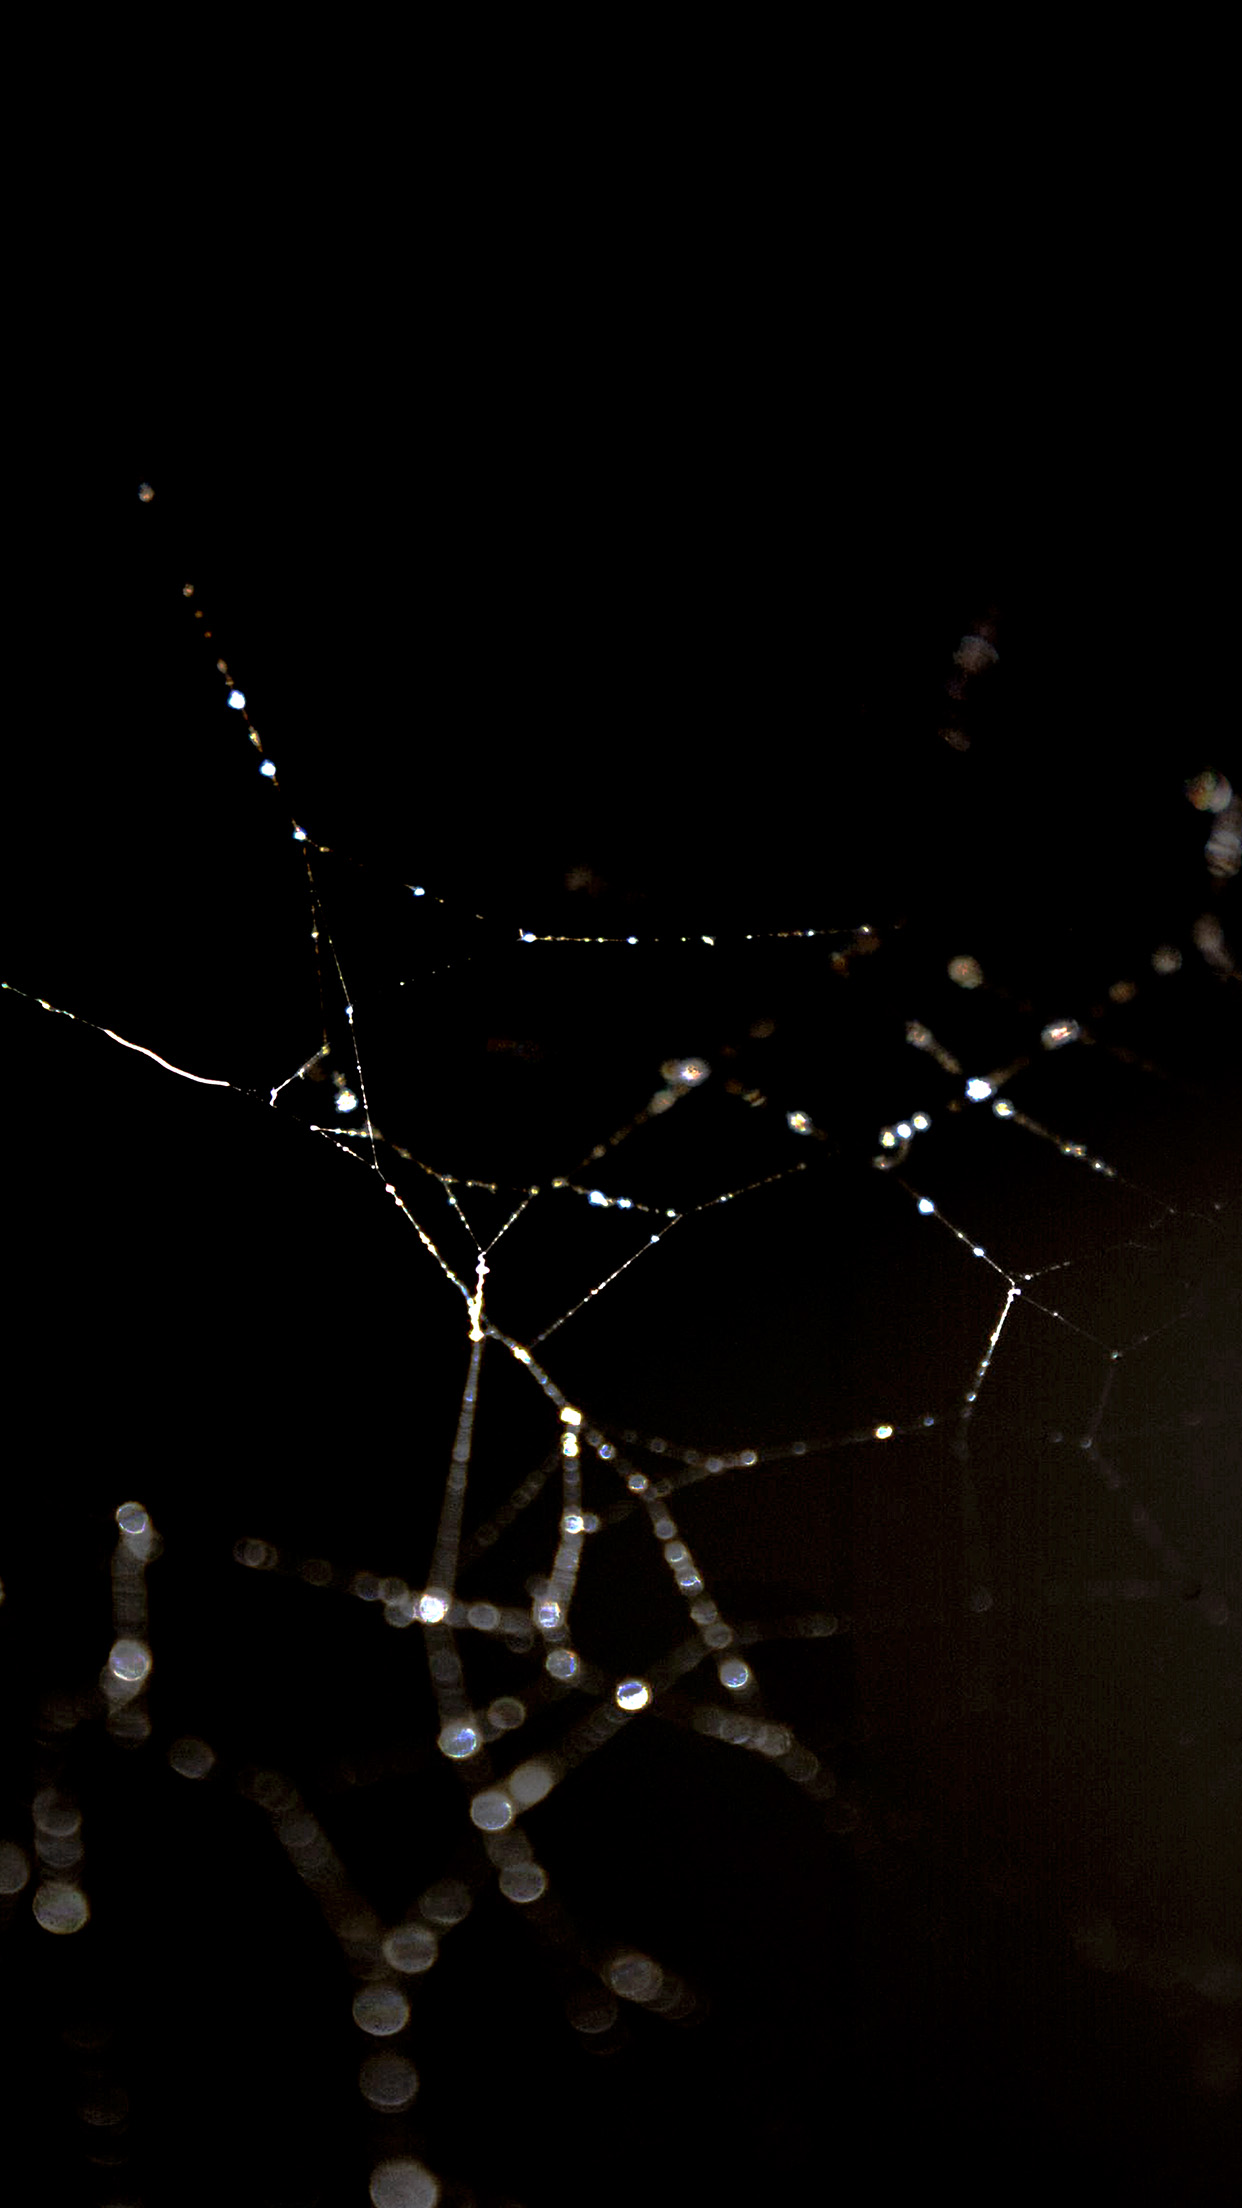 Spider Web Nature Rain Water Pattern Bw Dark Android wallpaper